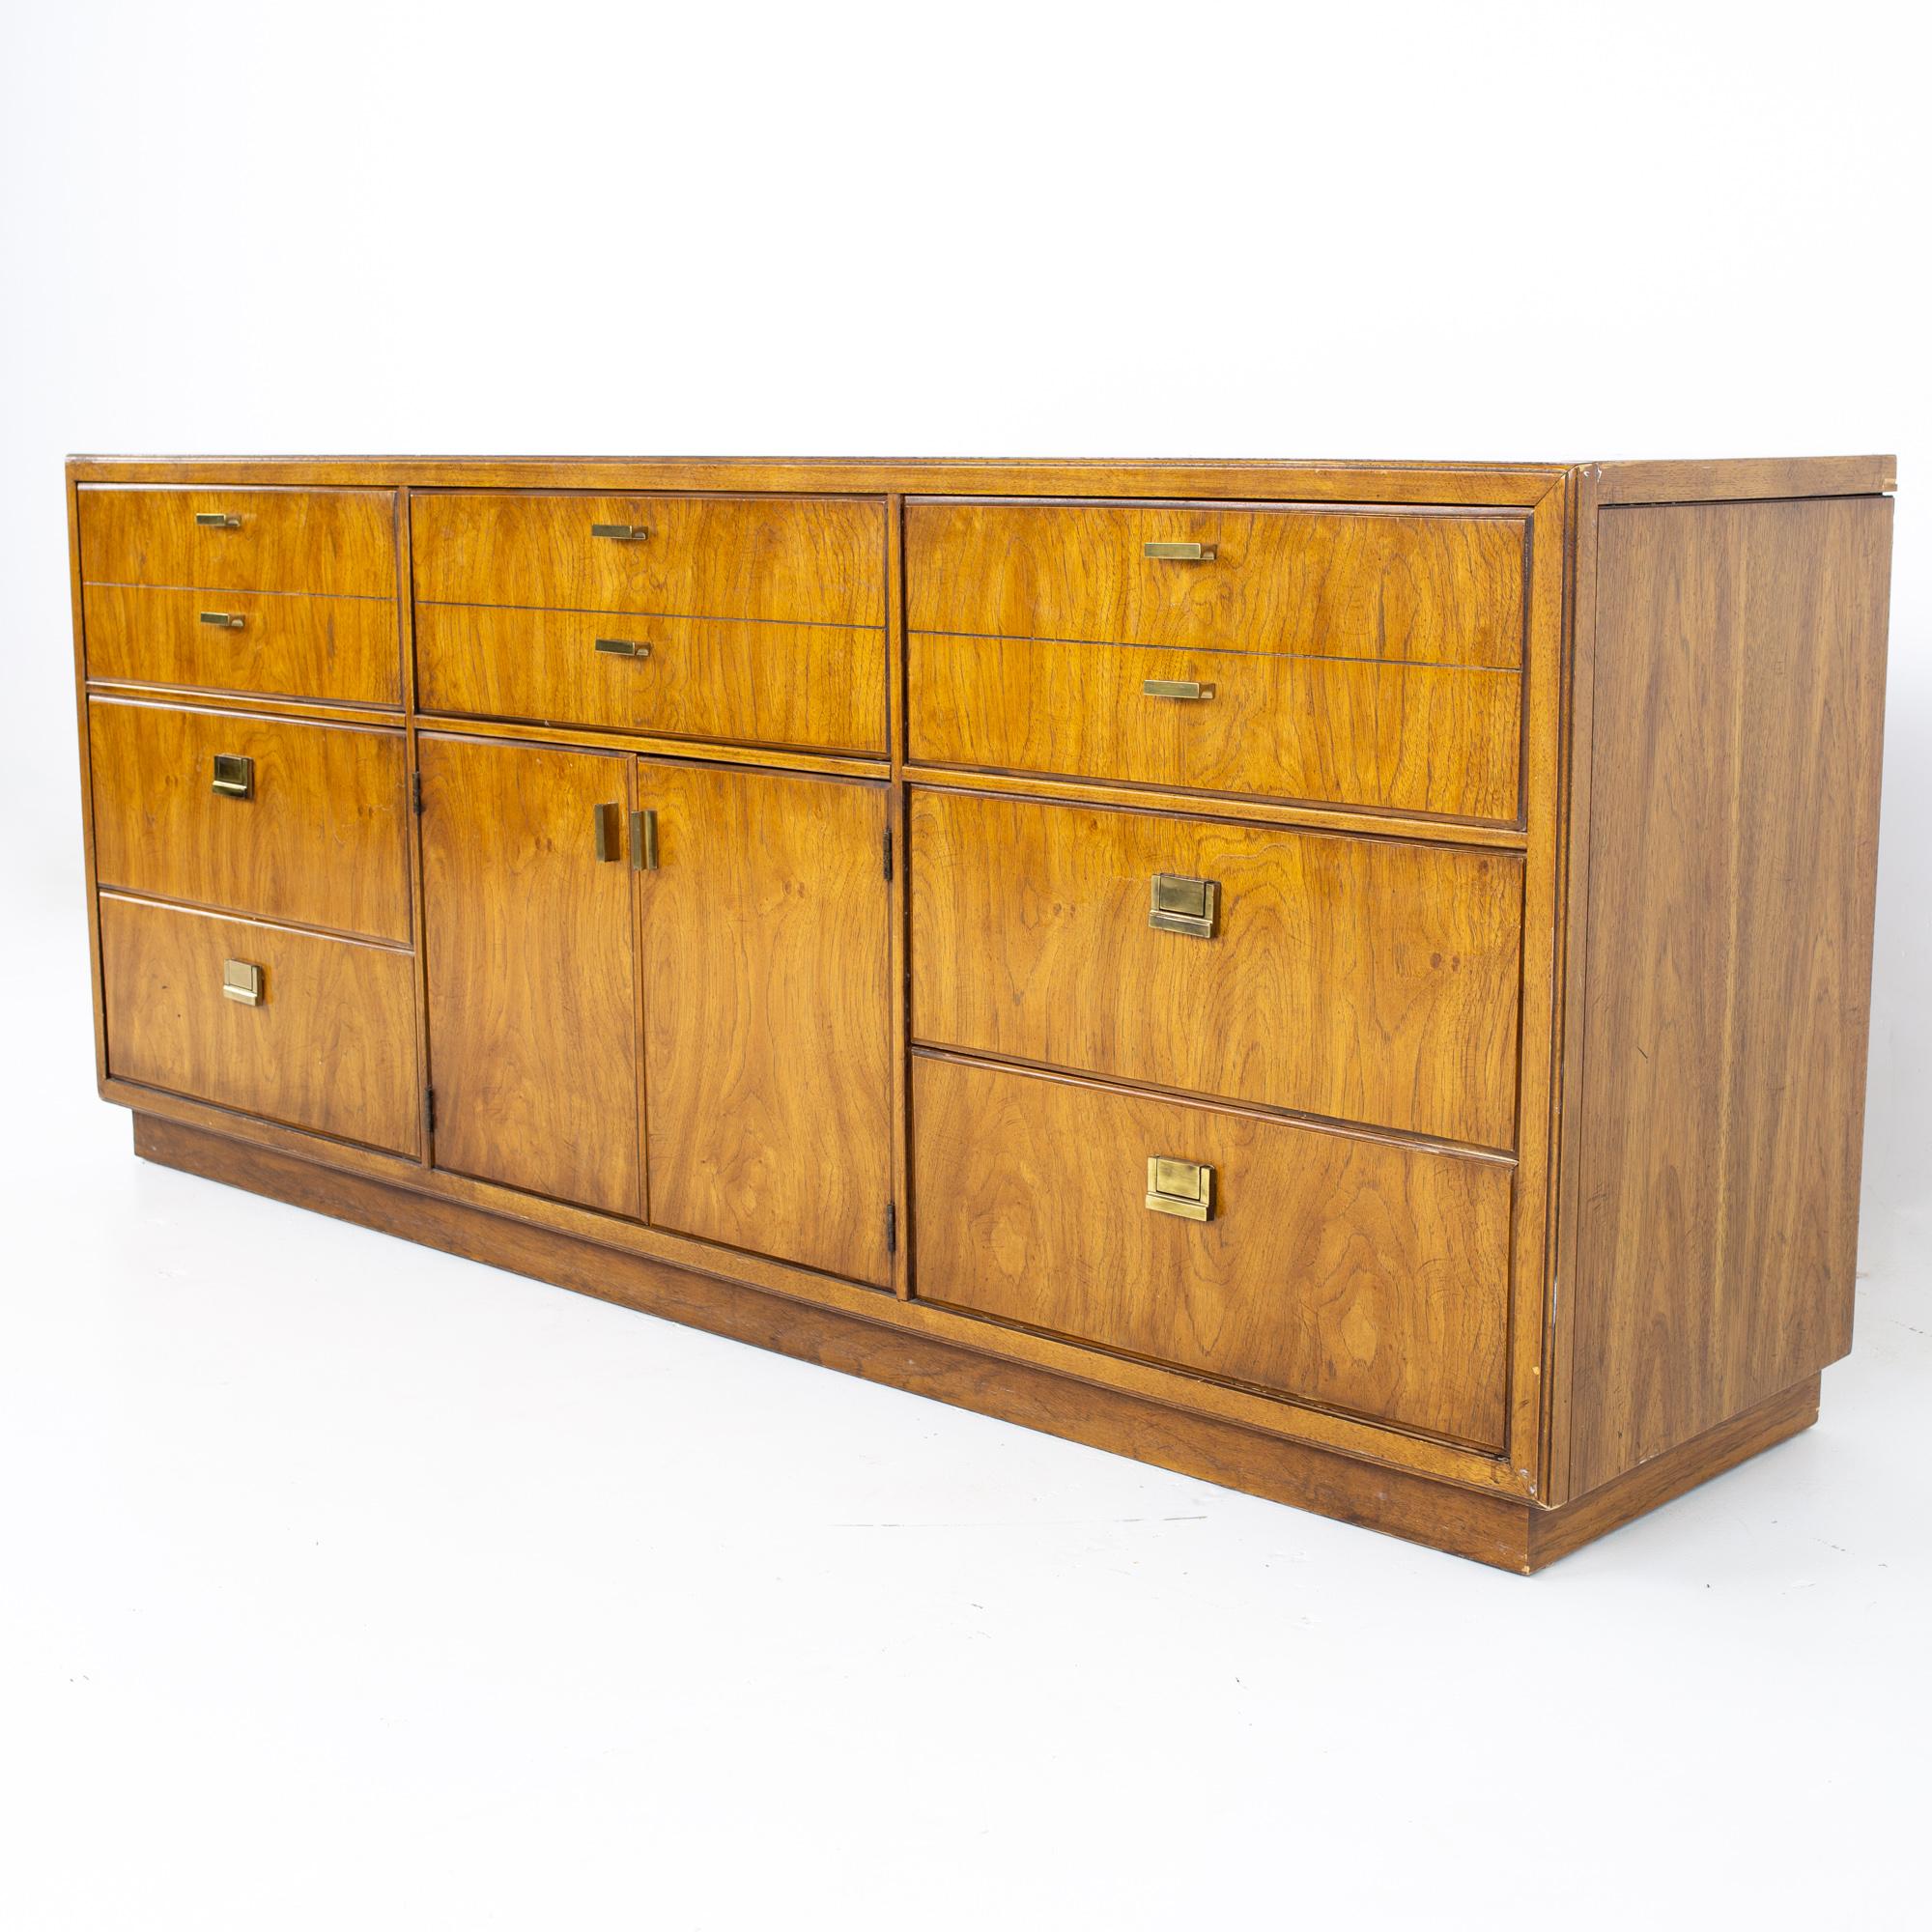 Drexel heritage consensus mid century pecan and brass 9 drawer lowboy dresser.
La commode mesure : 72 de large x 18.75 de profond x 30.5 de haut.